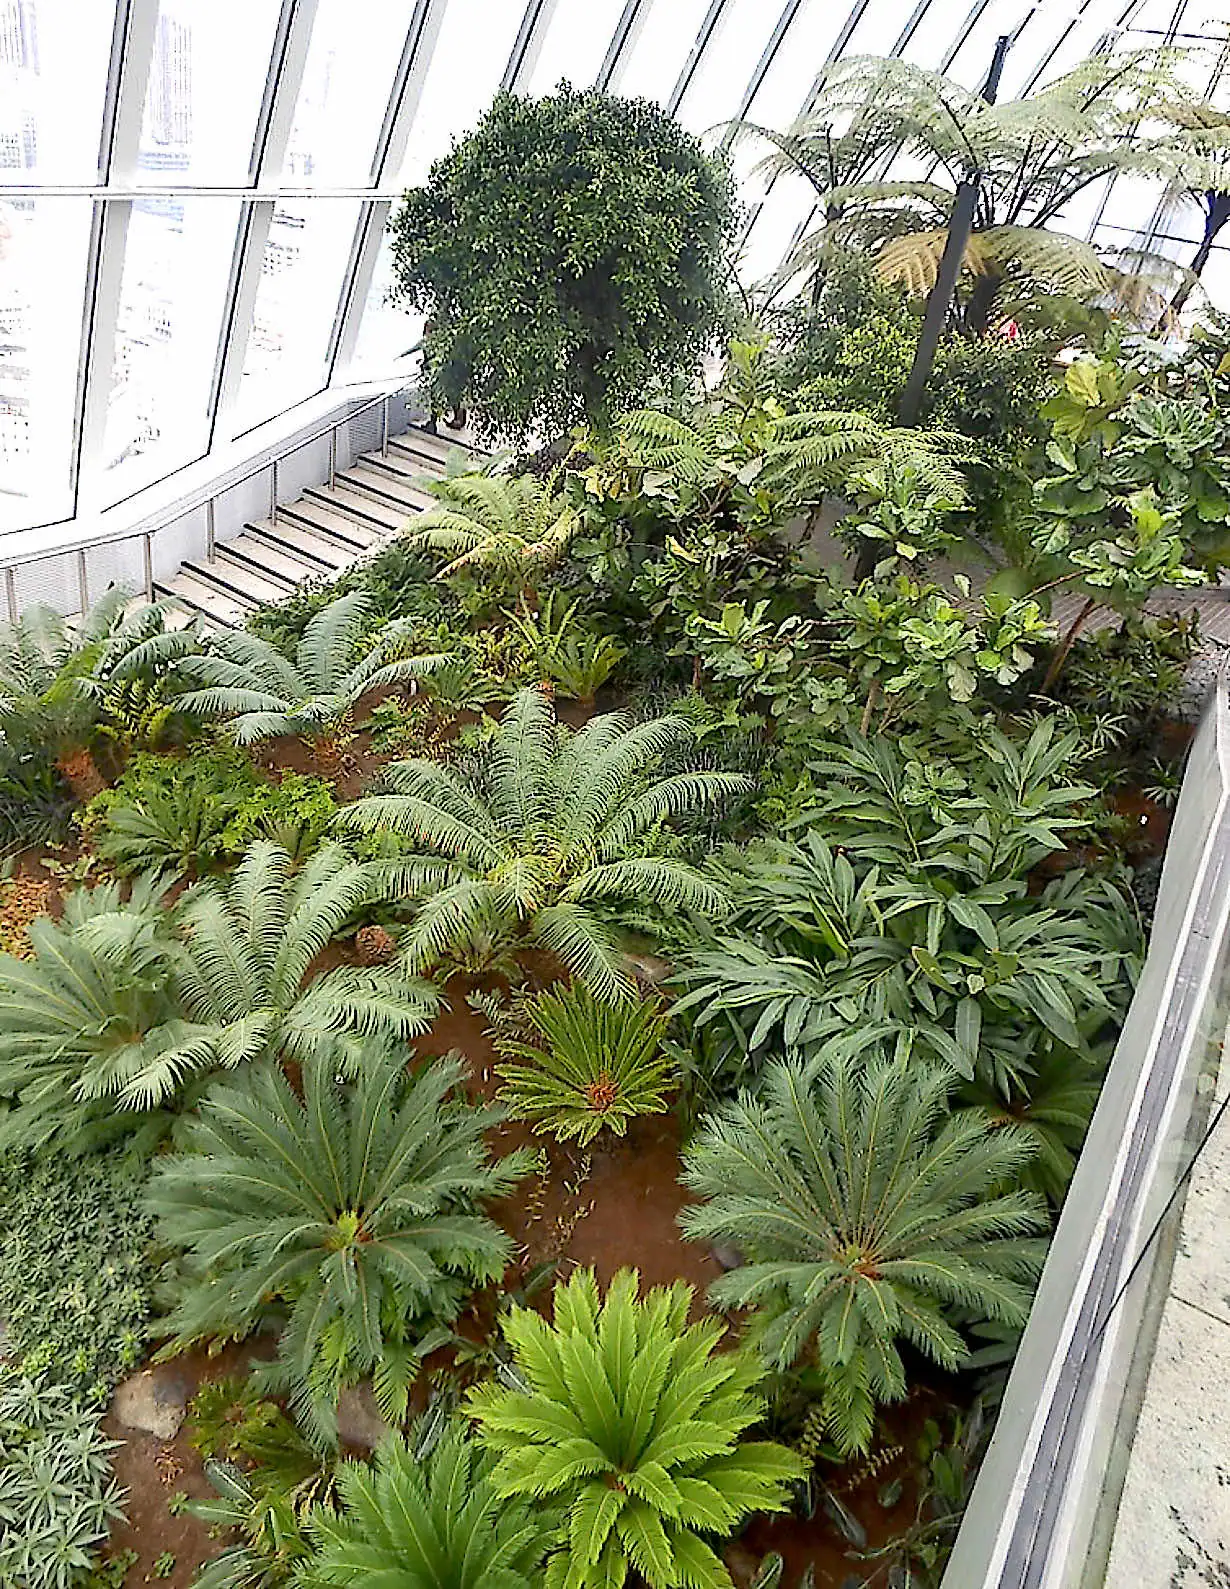 Tropical plants at the Sky Garden